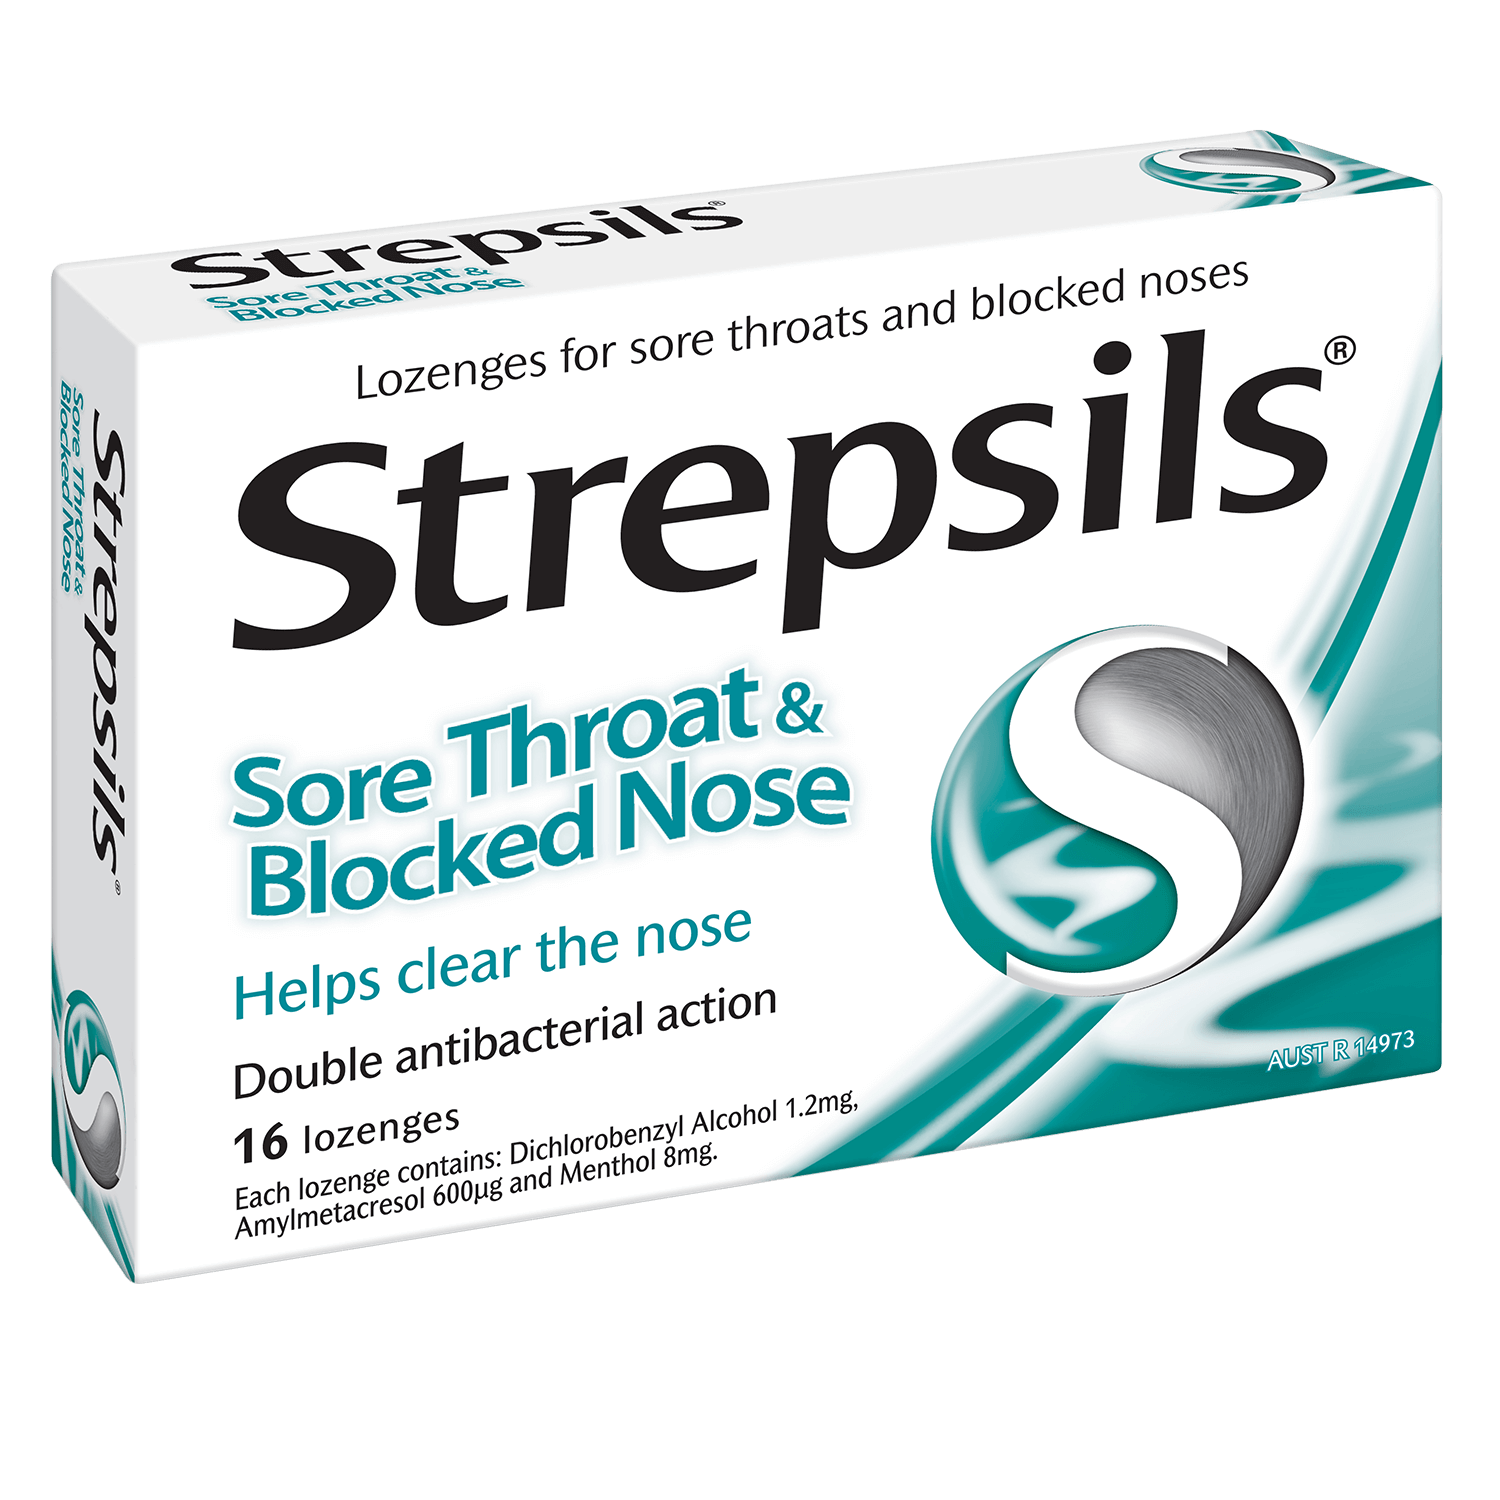 Strepsils Sore Throat Blocked Nose Lozenges